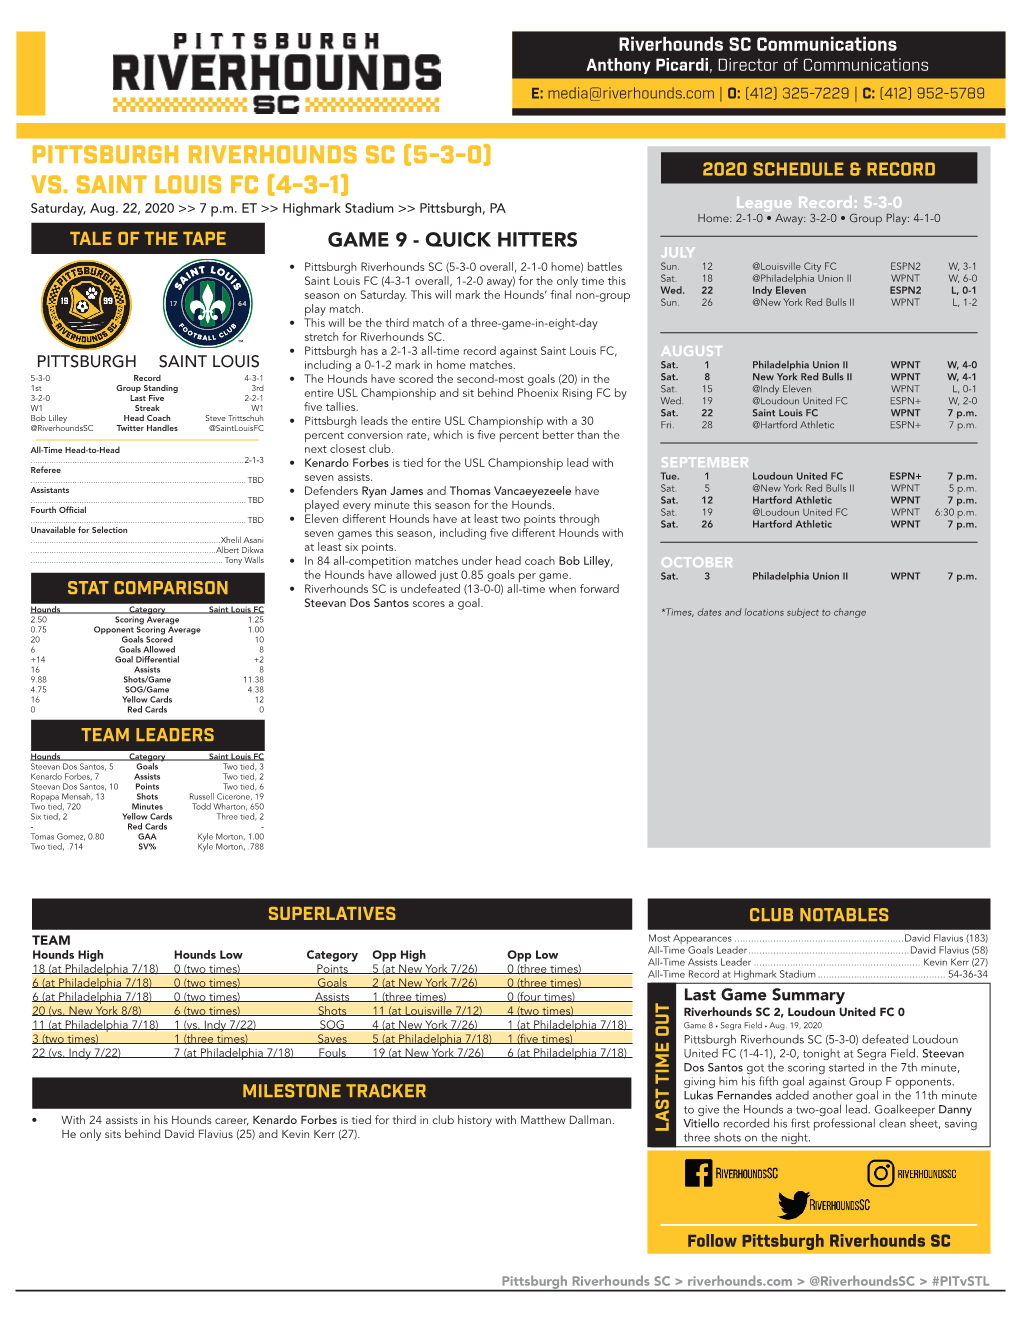 Pittsburgh Riverhounds Sc (5-3-0) 2020 Schedule & Record Vs